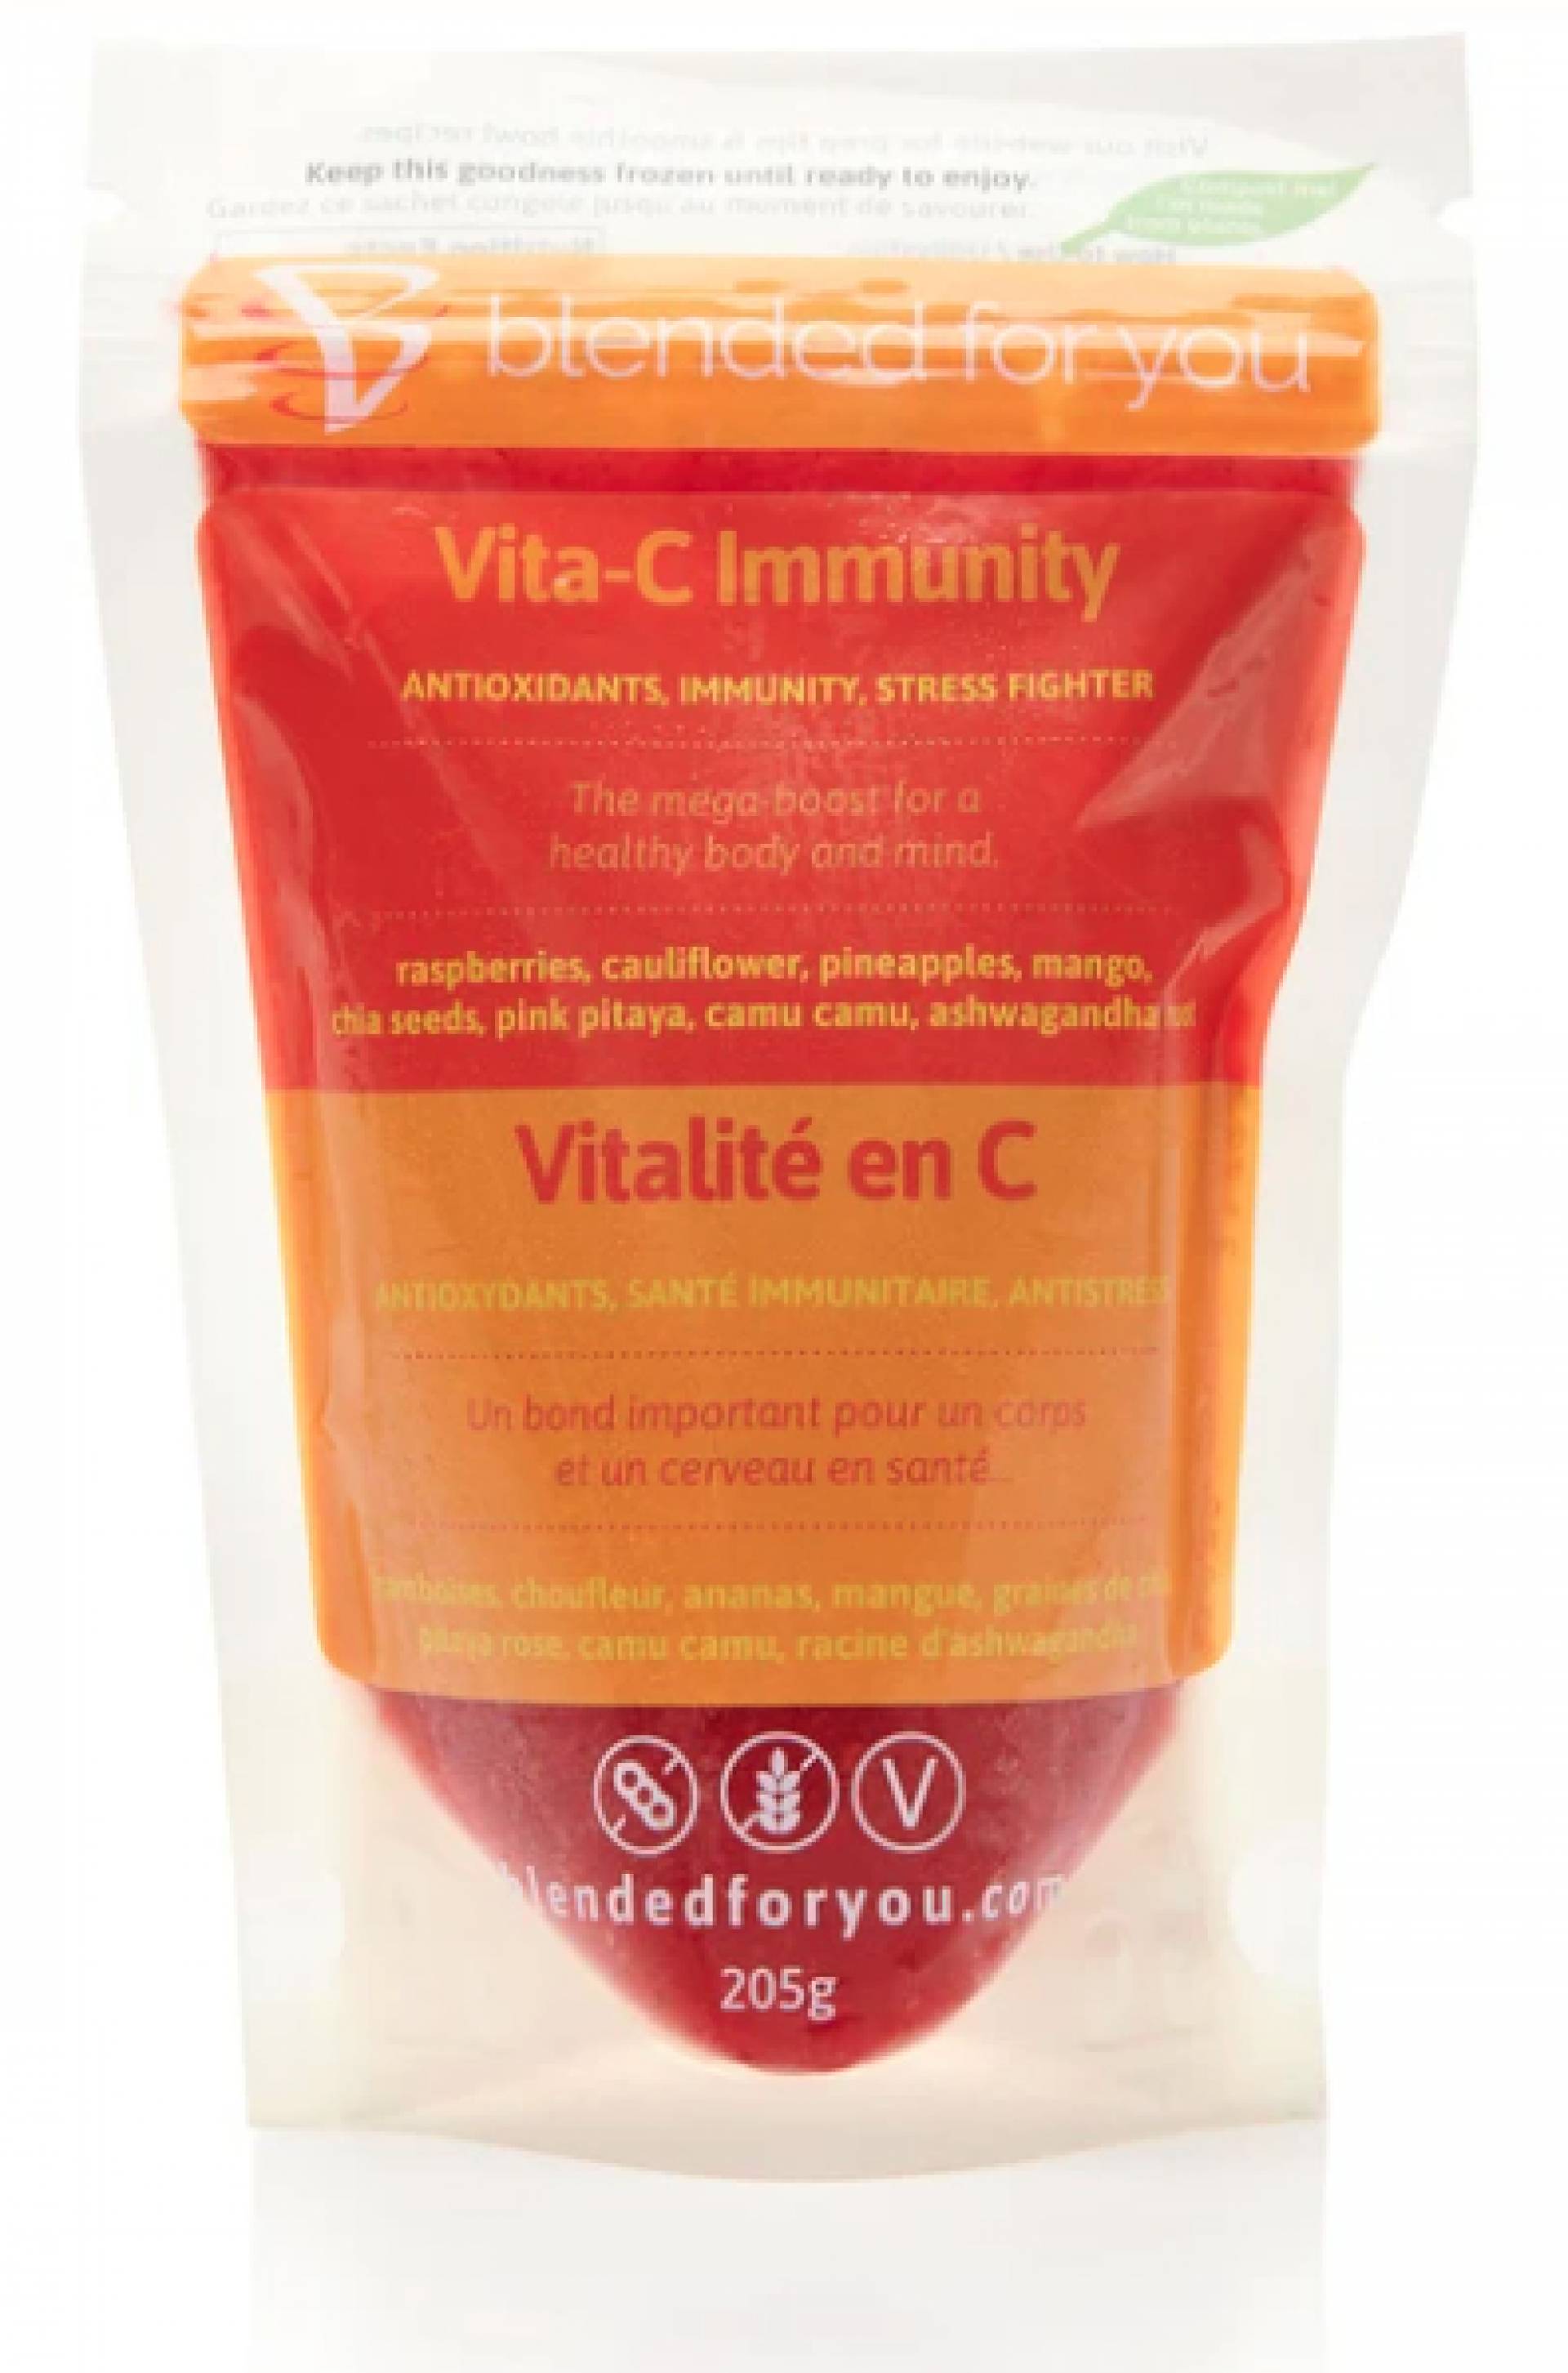 The Vita-C Immunity Smoothie